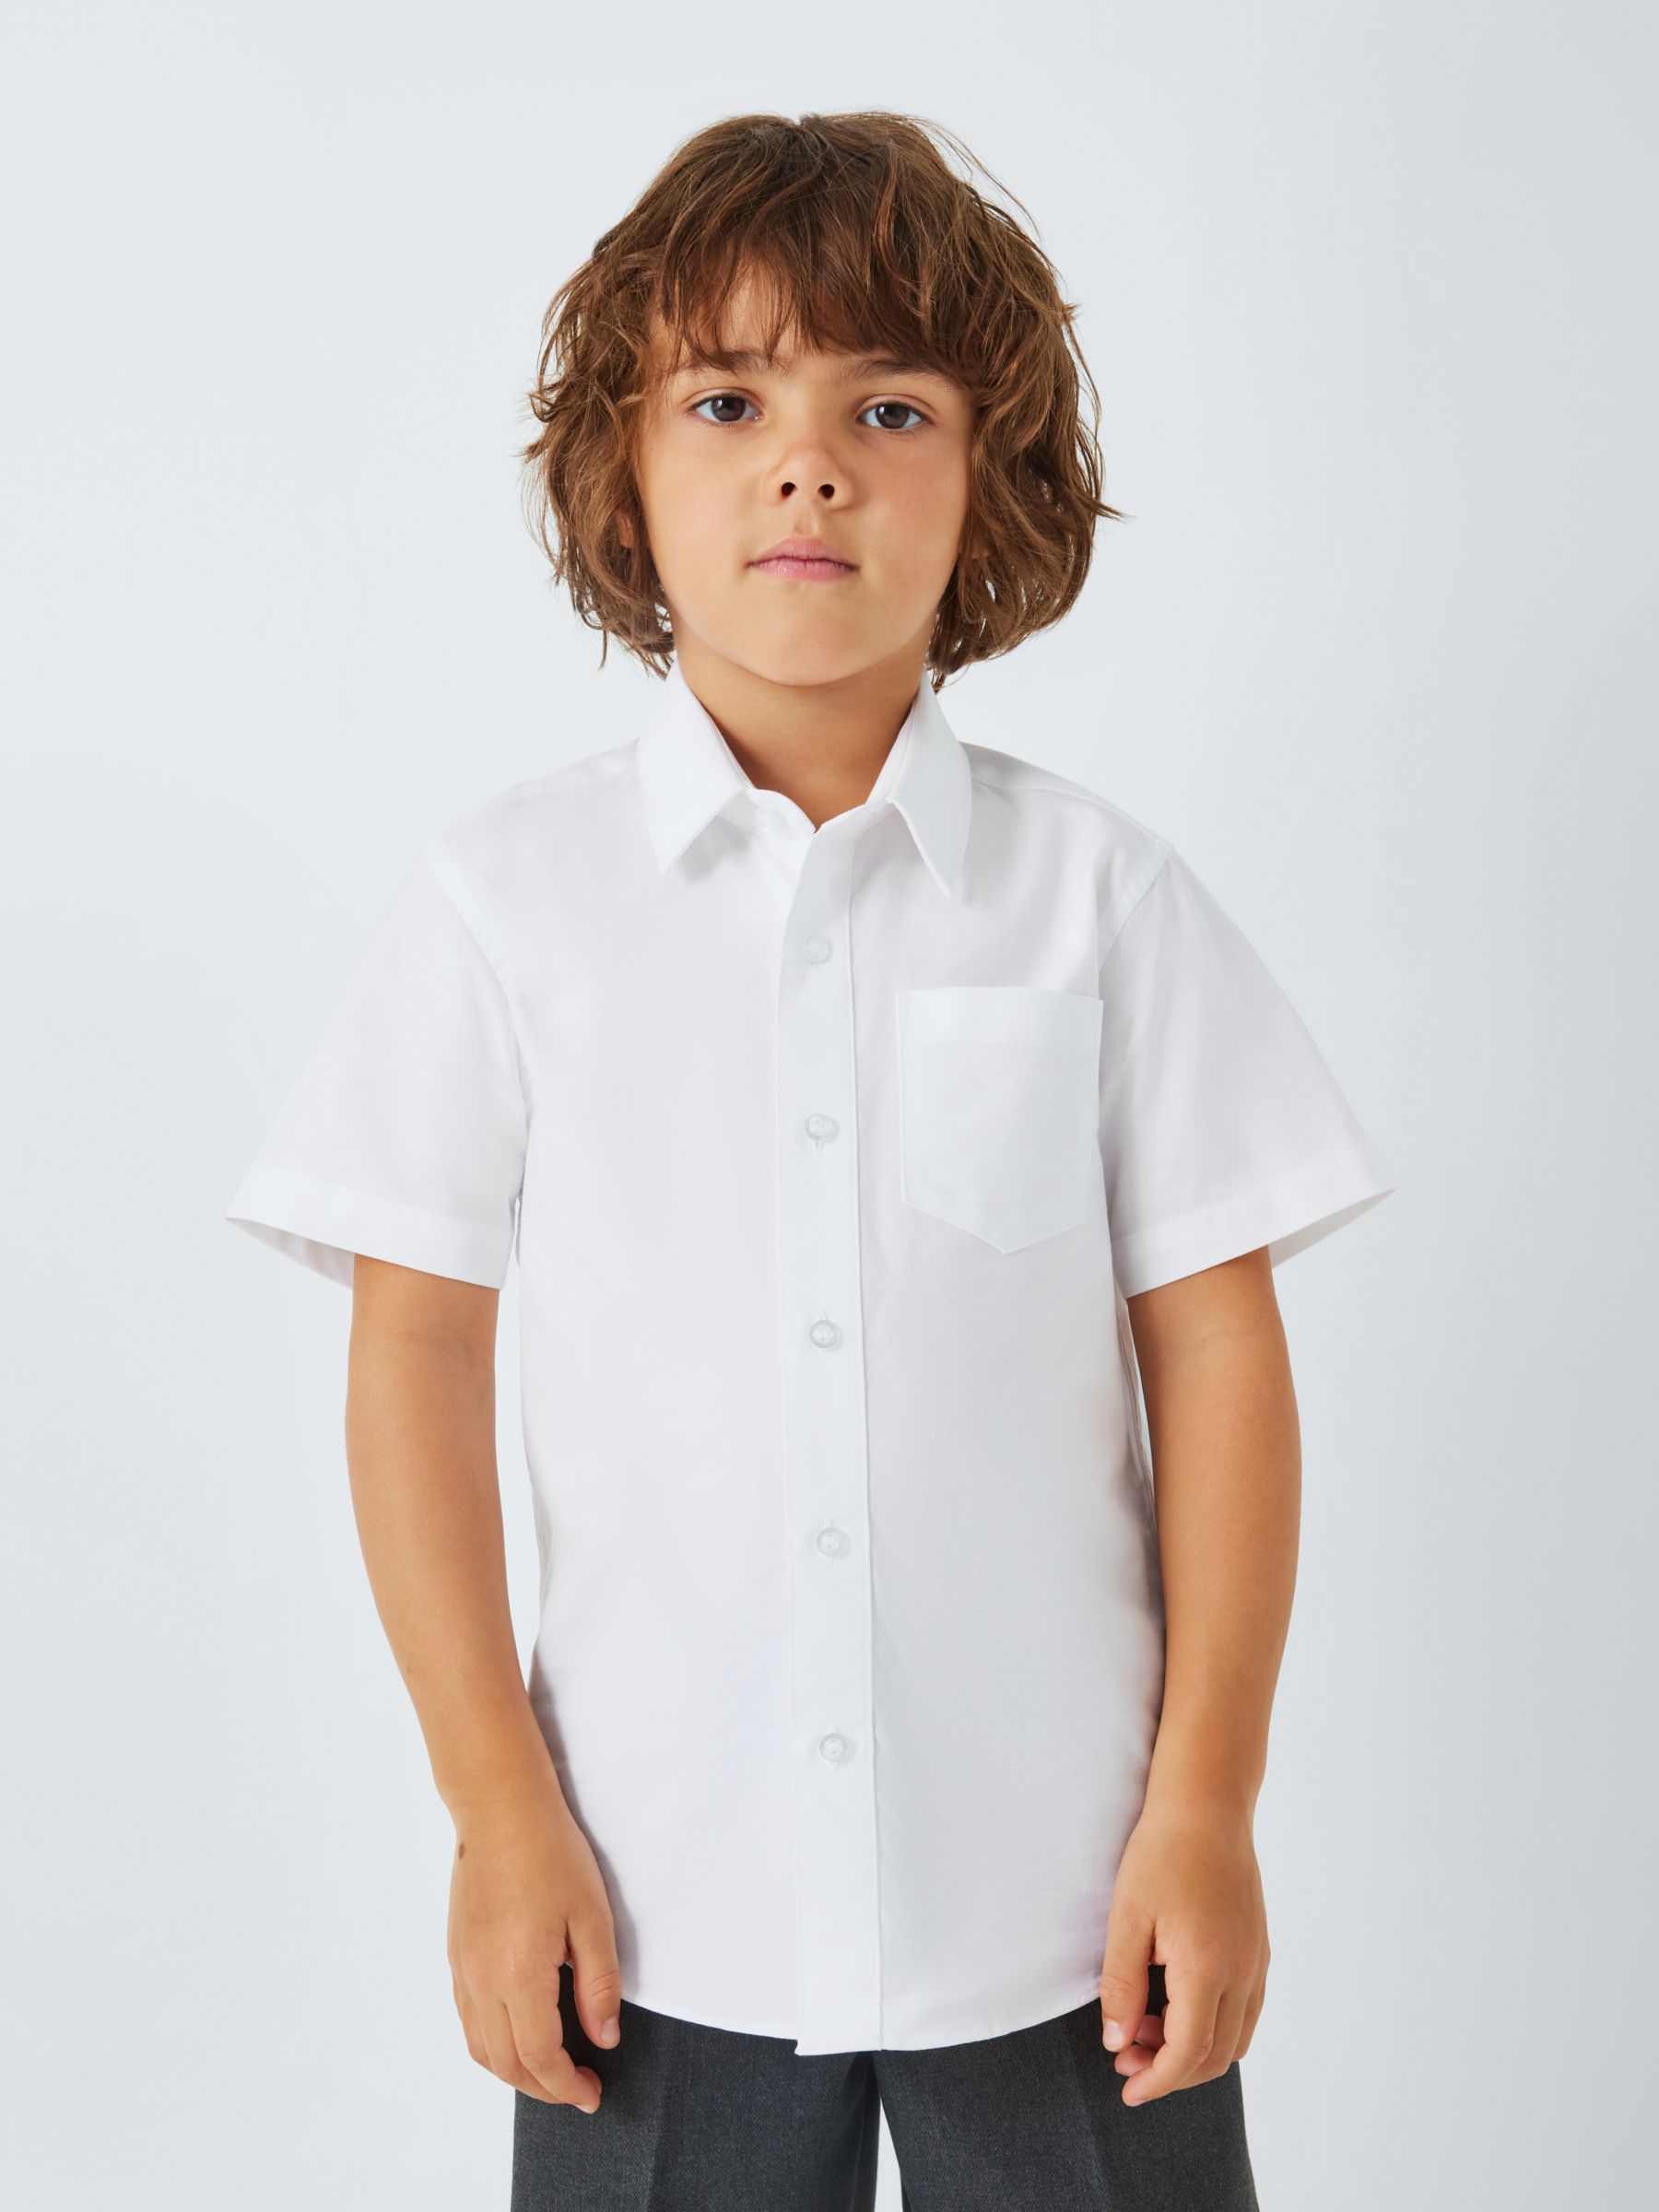 John Lewis GOTS Organic Cotton Short Sleeve School Shirt, Pack of 2, White, 3 years